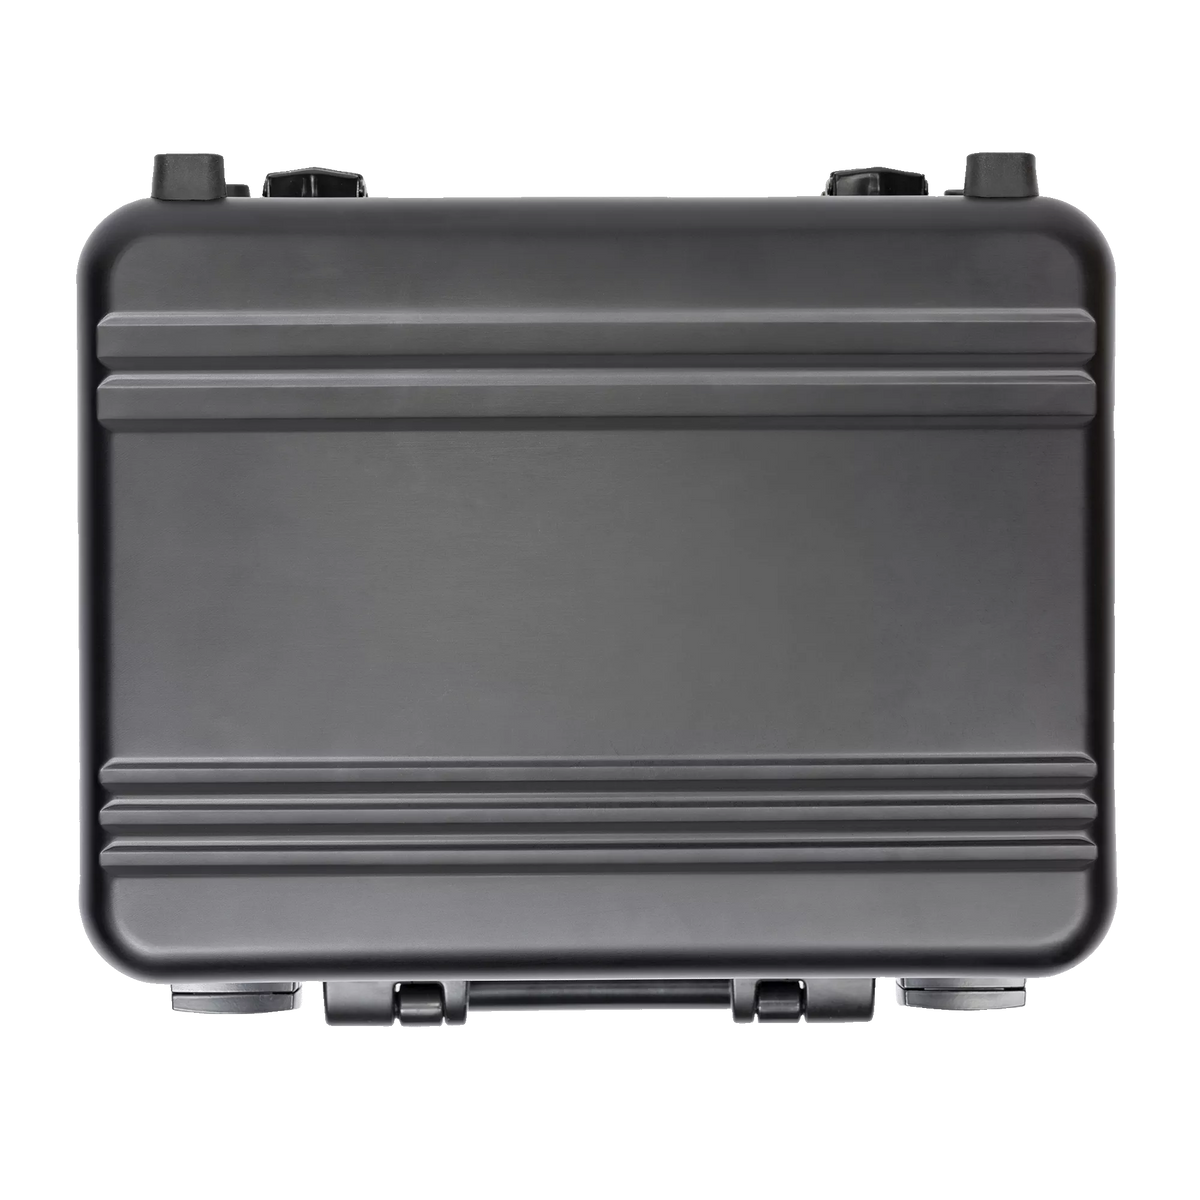 Audeze Aluminum Travel Case for LCD-5, CRBN, MM Series